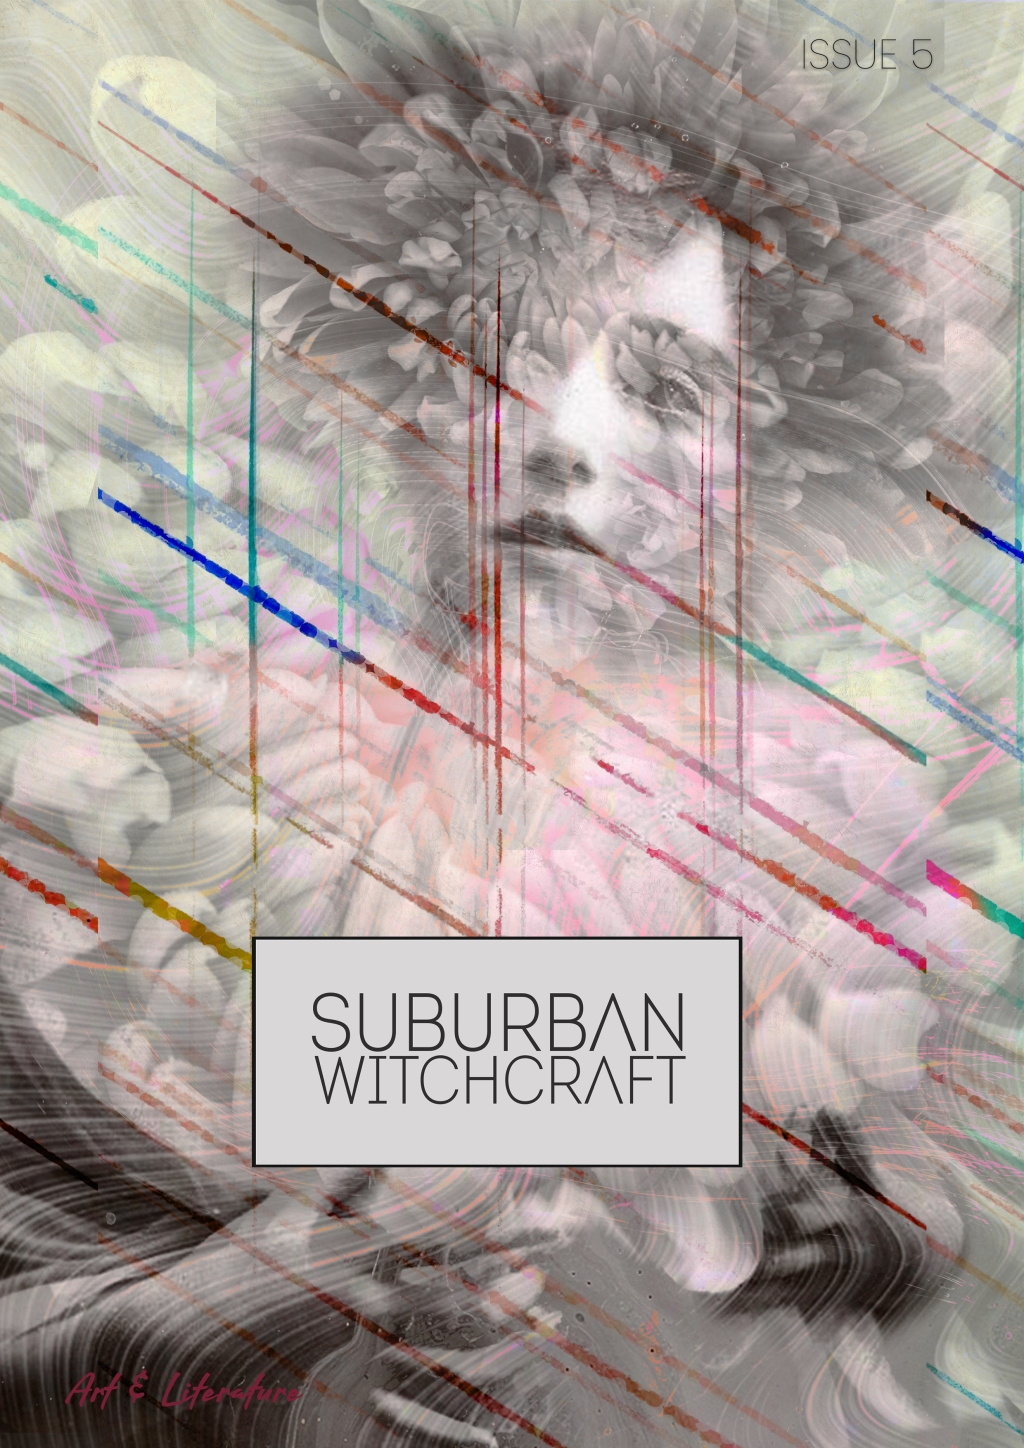 Suburban Witchcraft Magazine Issue 5 now live!